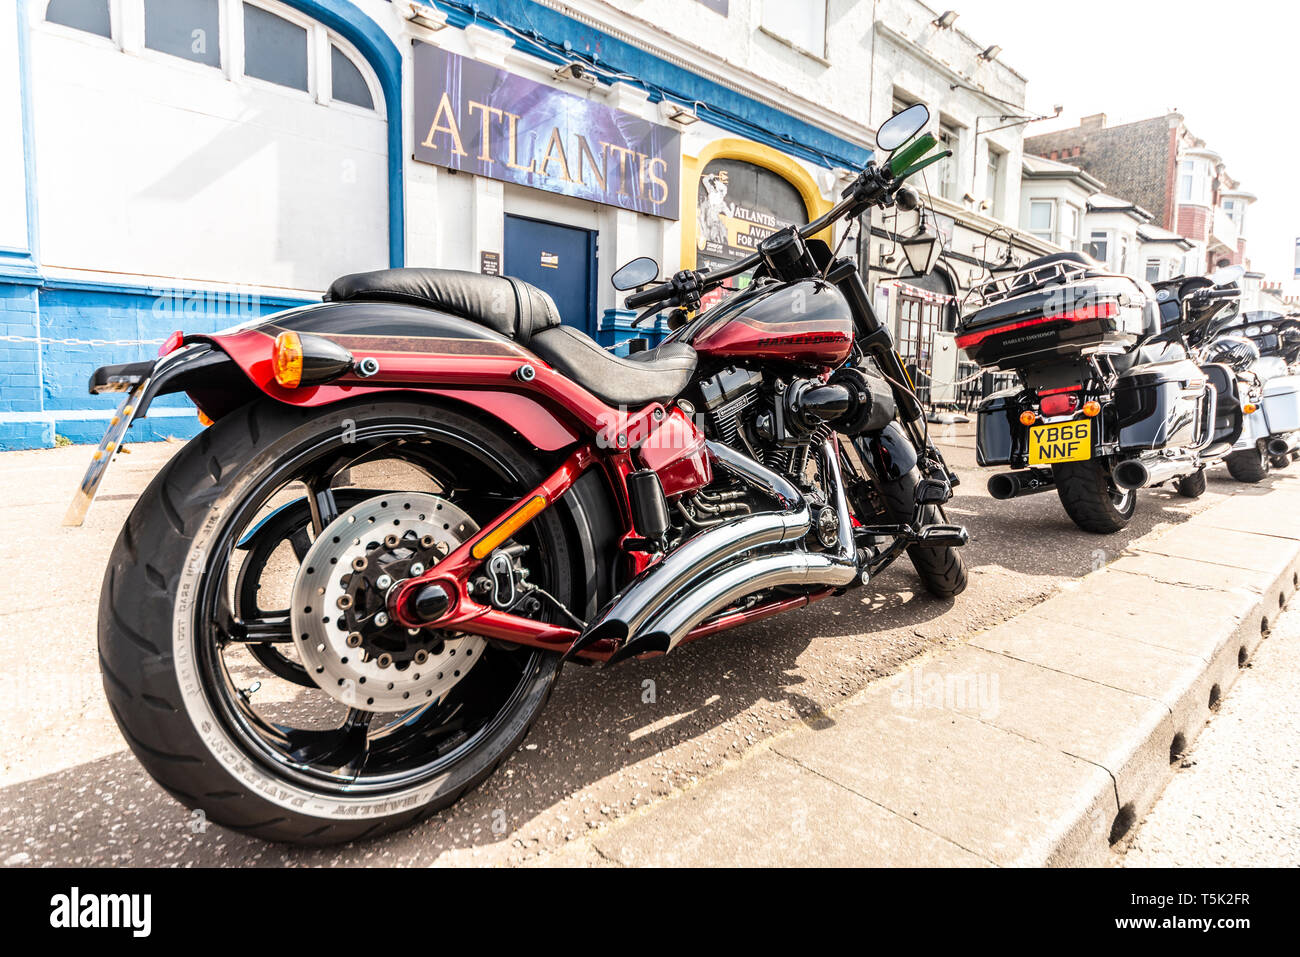 Custom Harley Davidson 110 motorbike outside the Atlantis pub at the Southend Shakedown motorcycle rally, Southend on Sea, Essex, UK Stock Photo